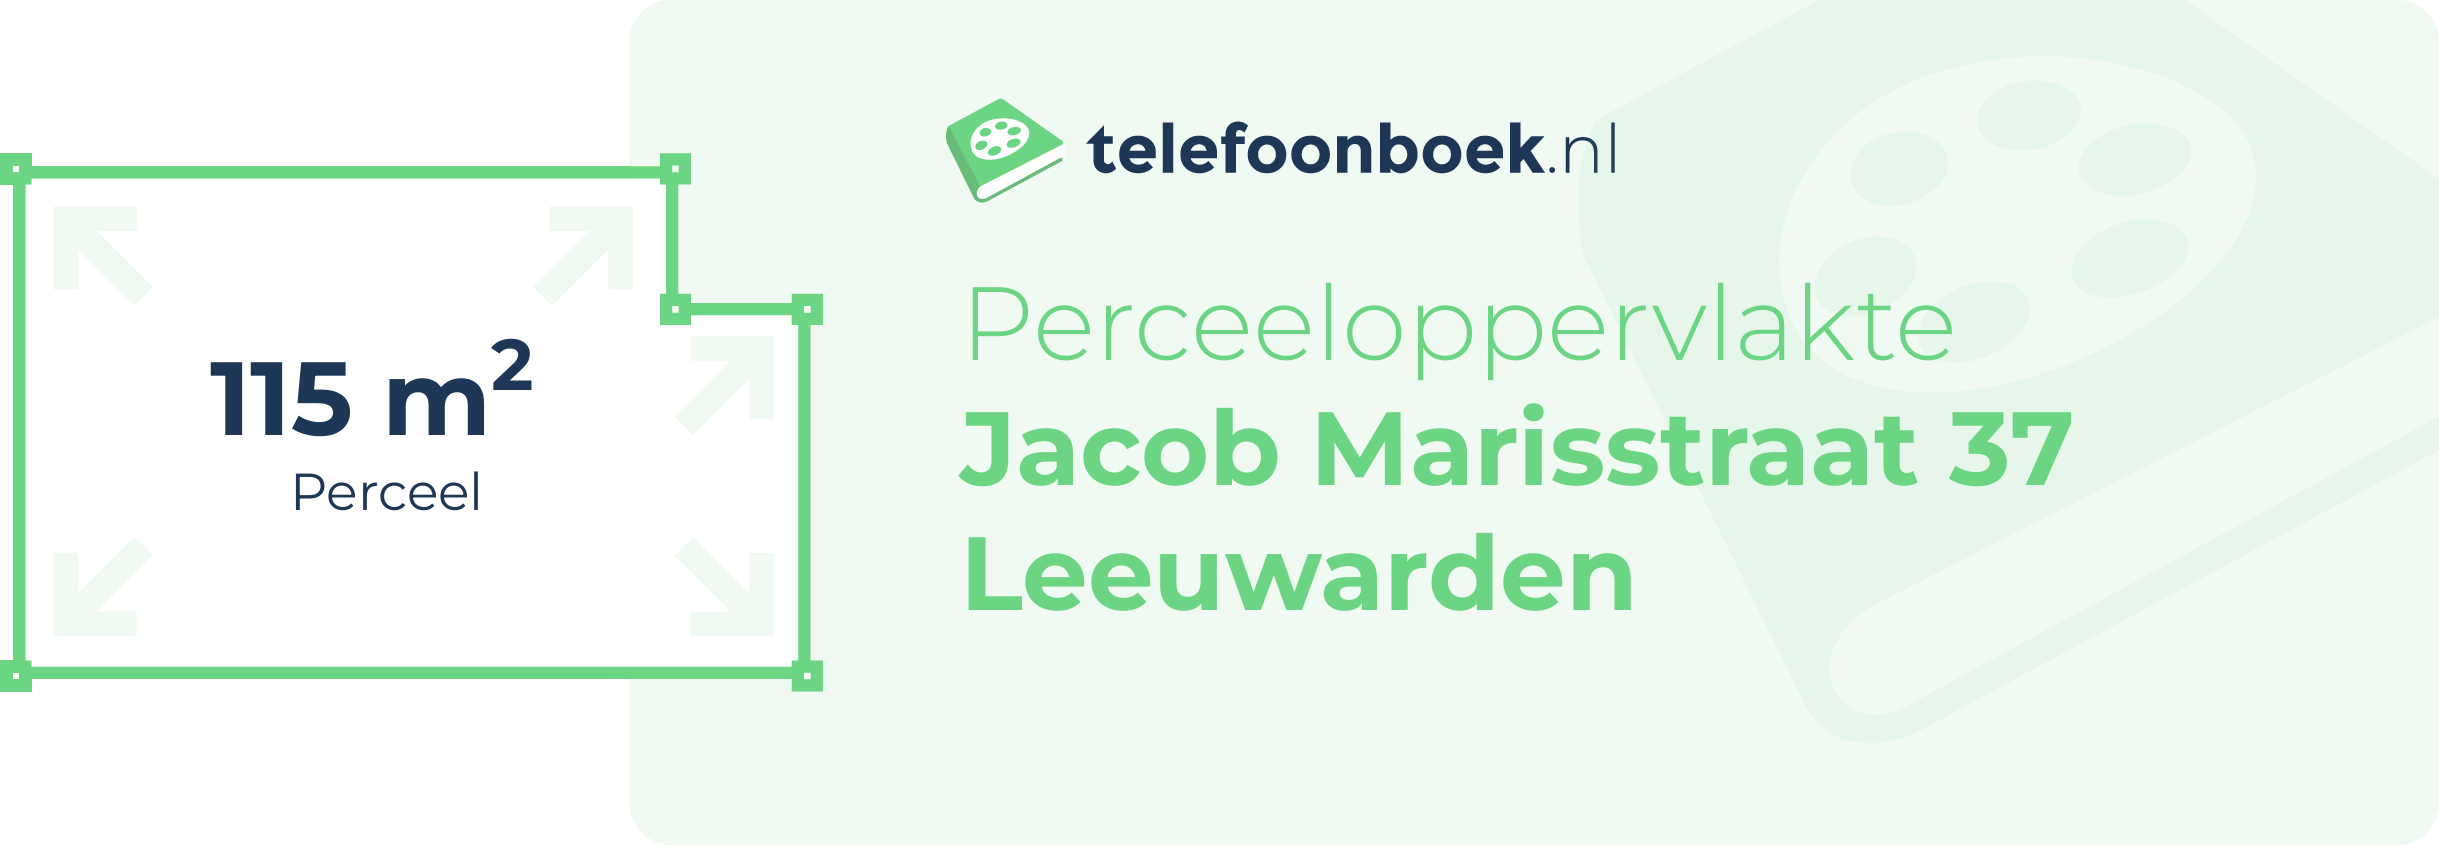 Perceeloppervlakte Jacob Marisstraat 37 Leeuwarden